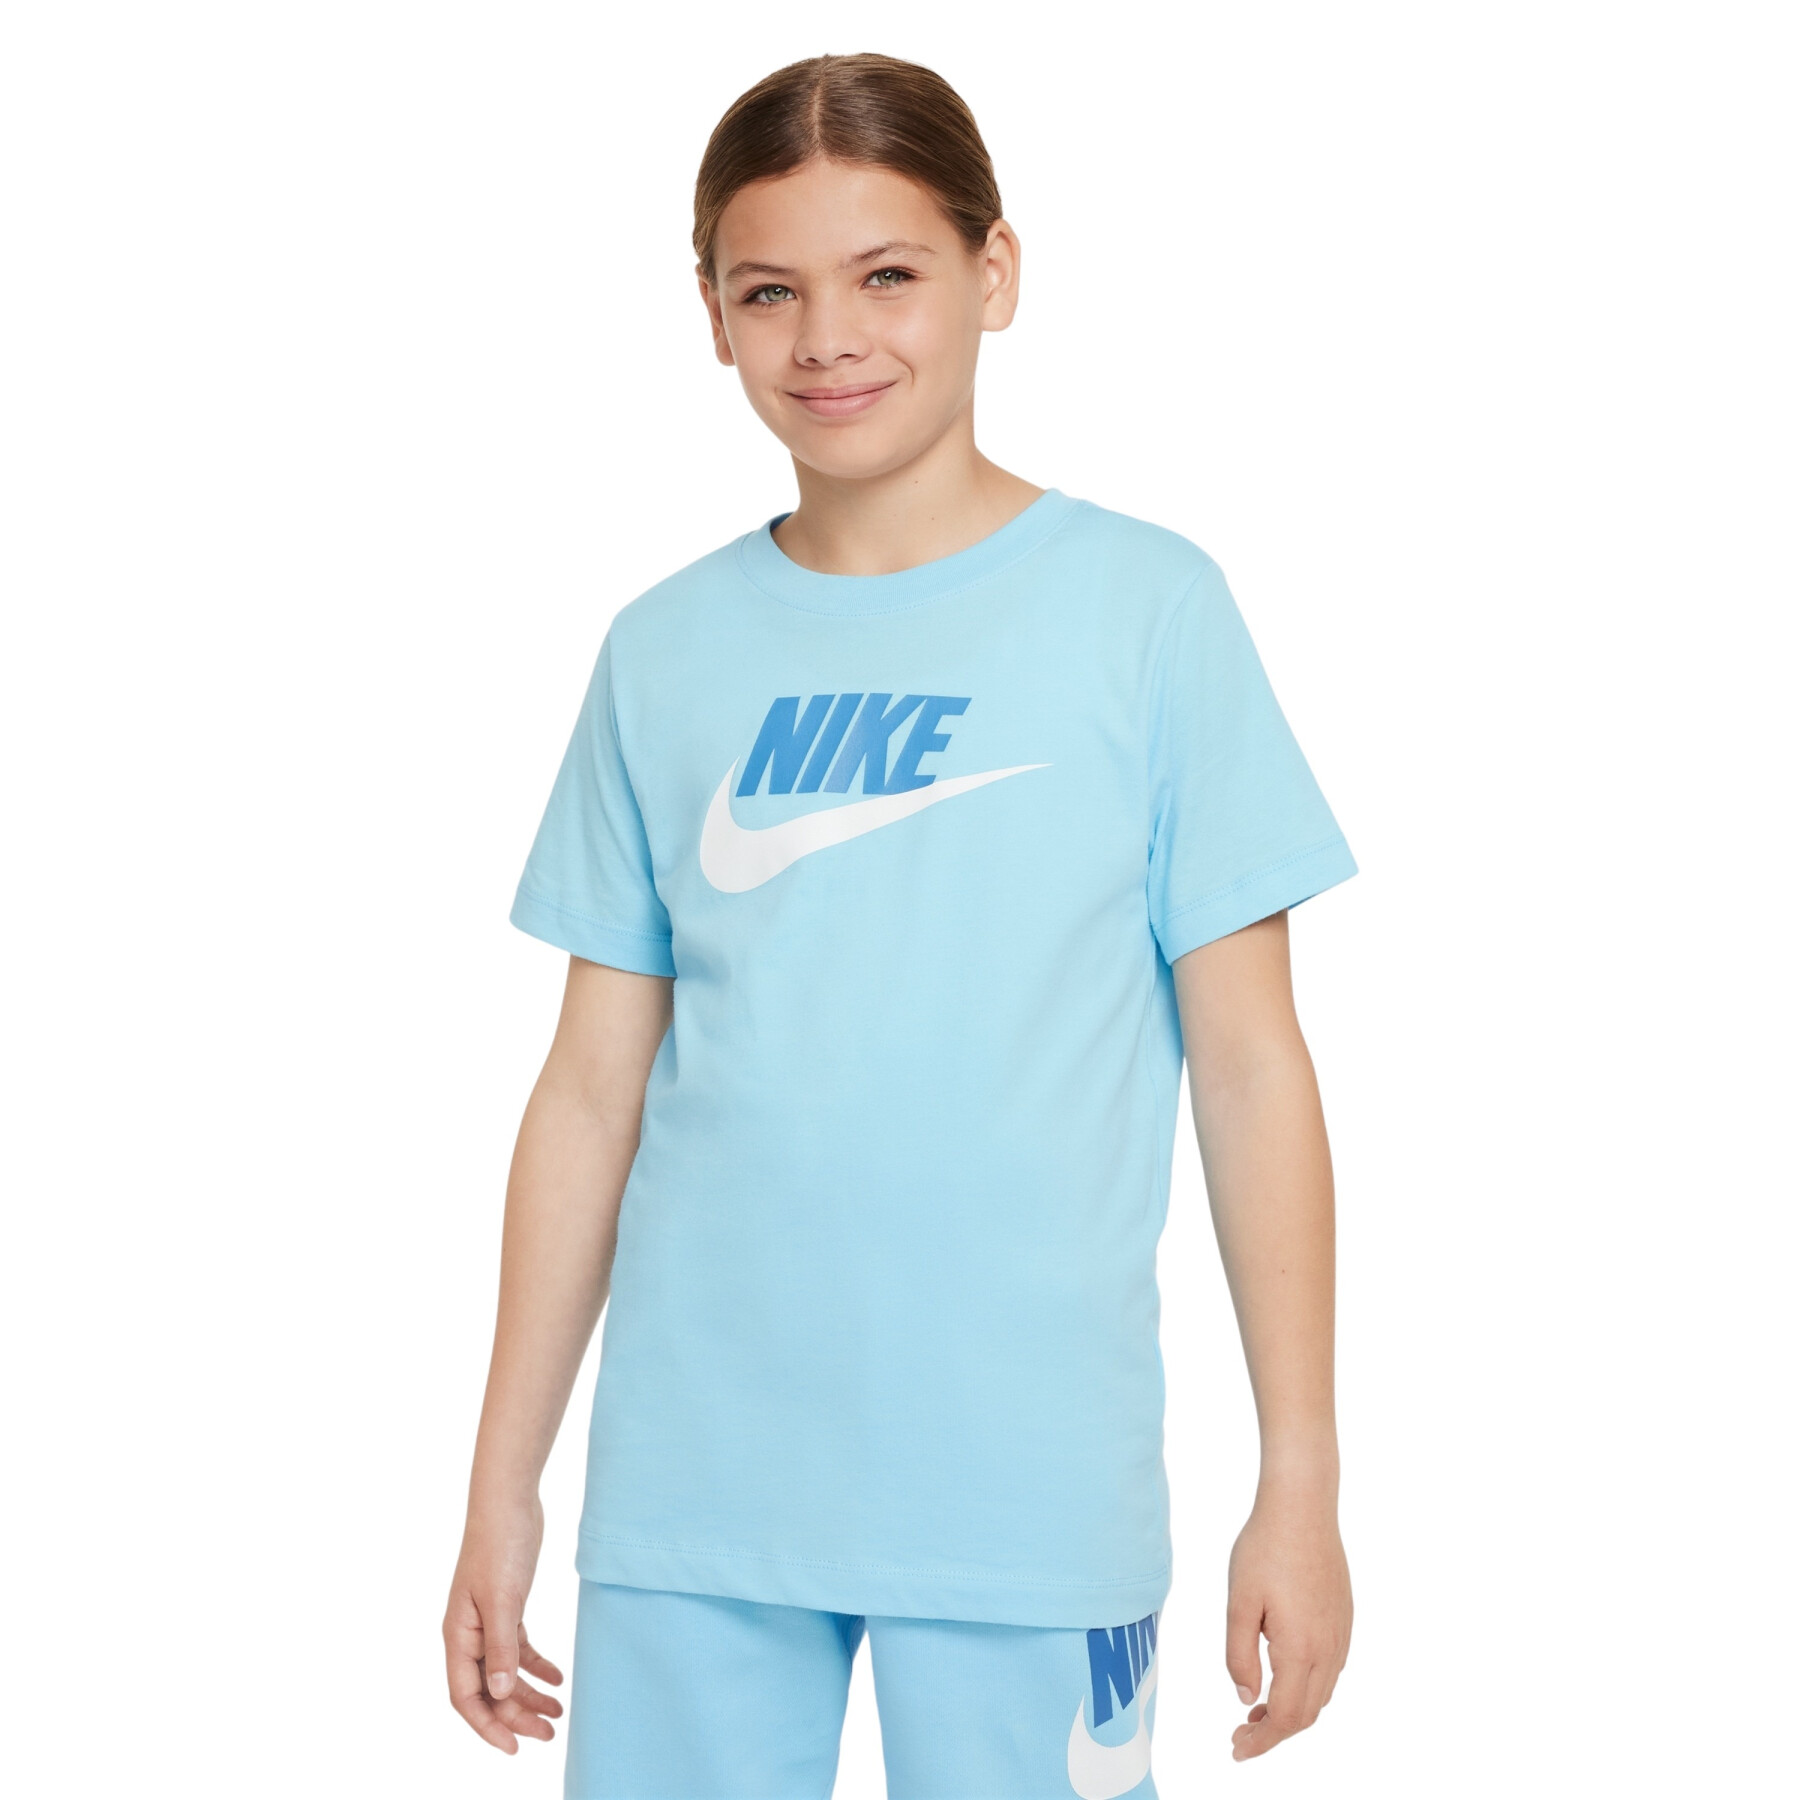 T-shirt cotton child Nike